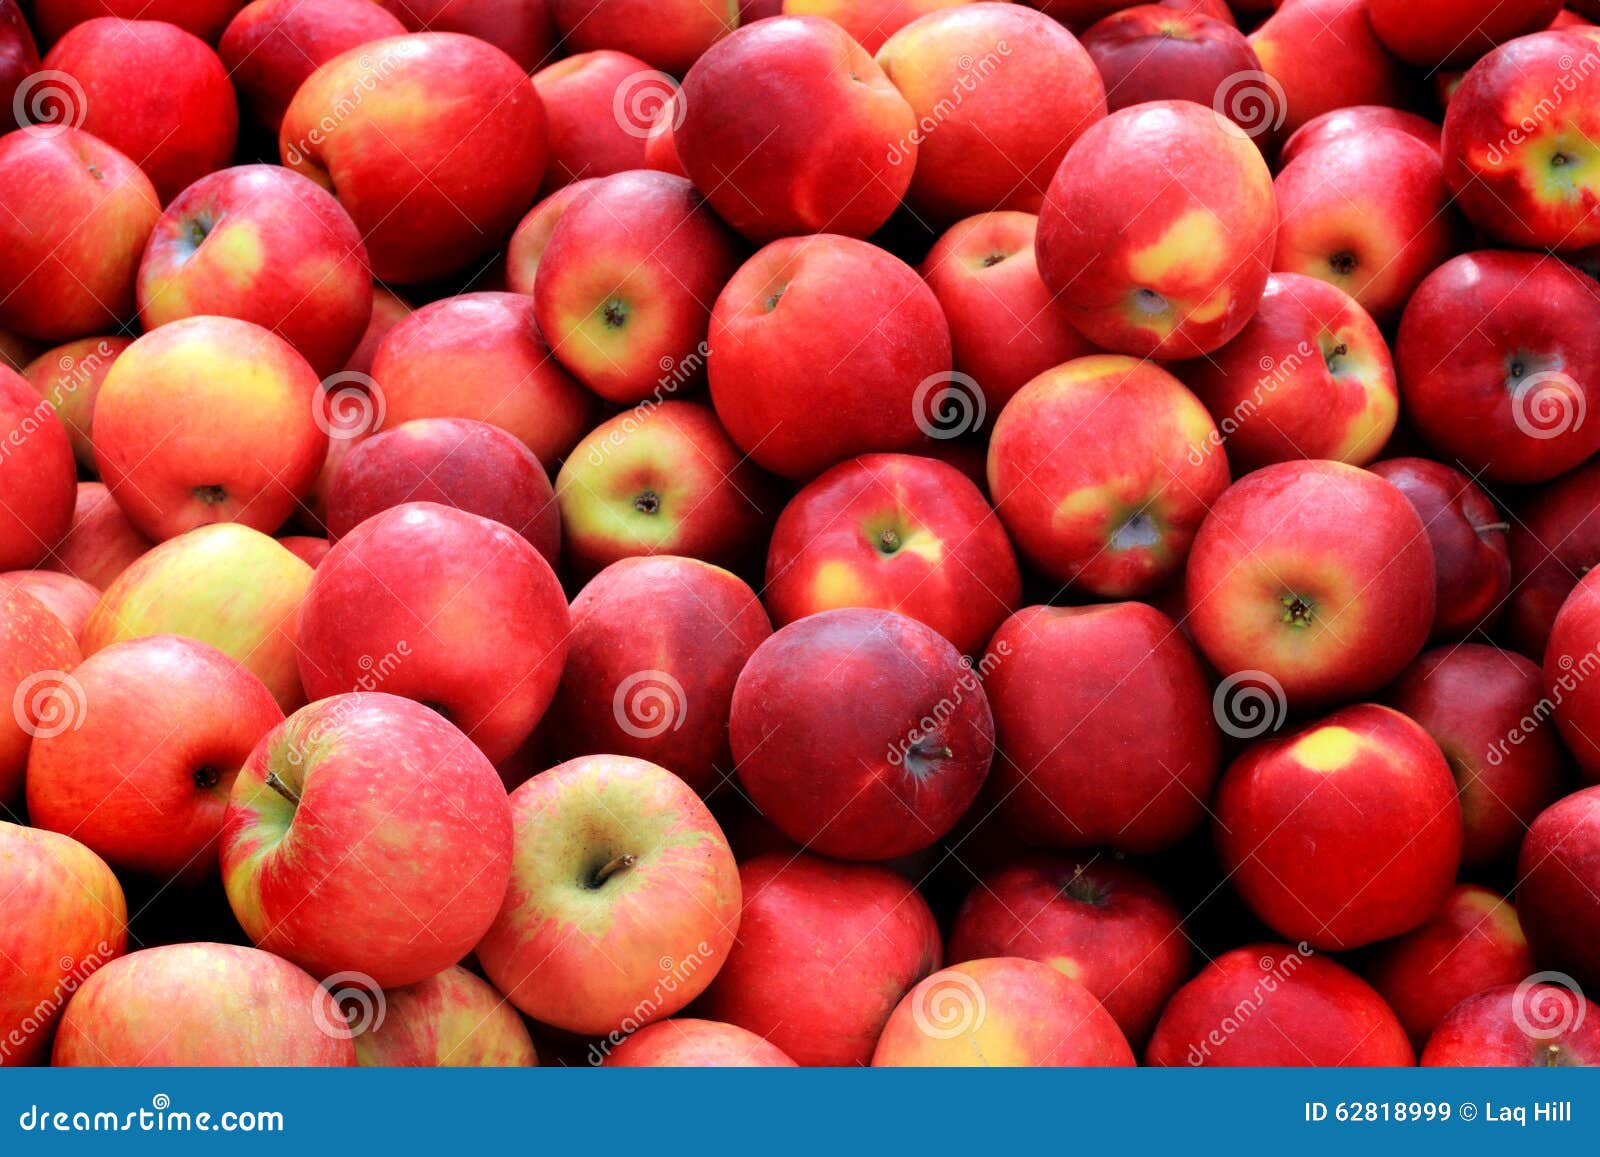 bushel of red apples